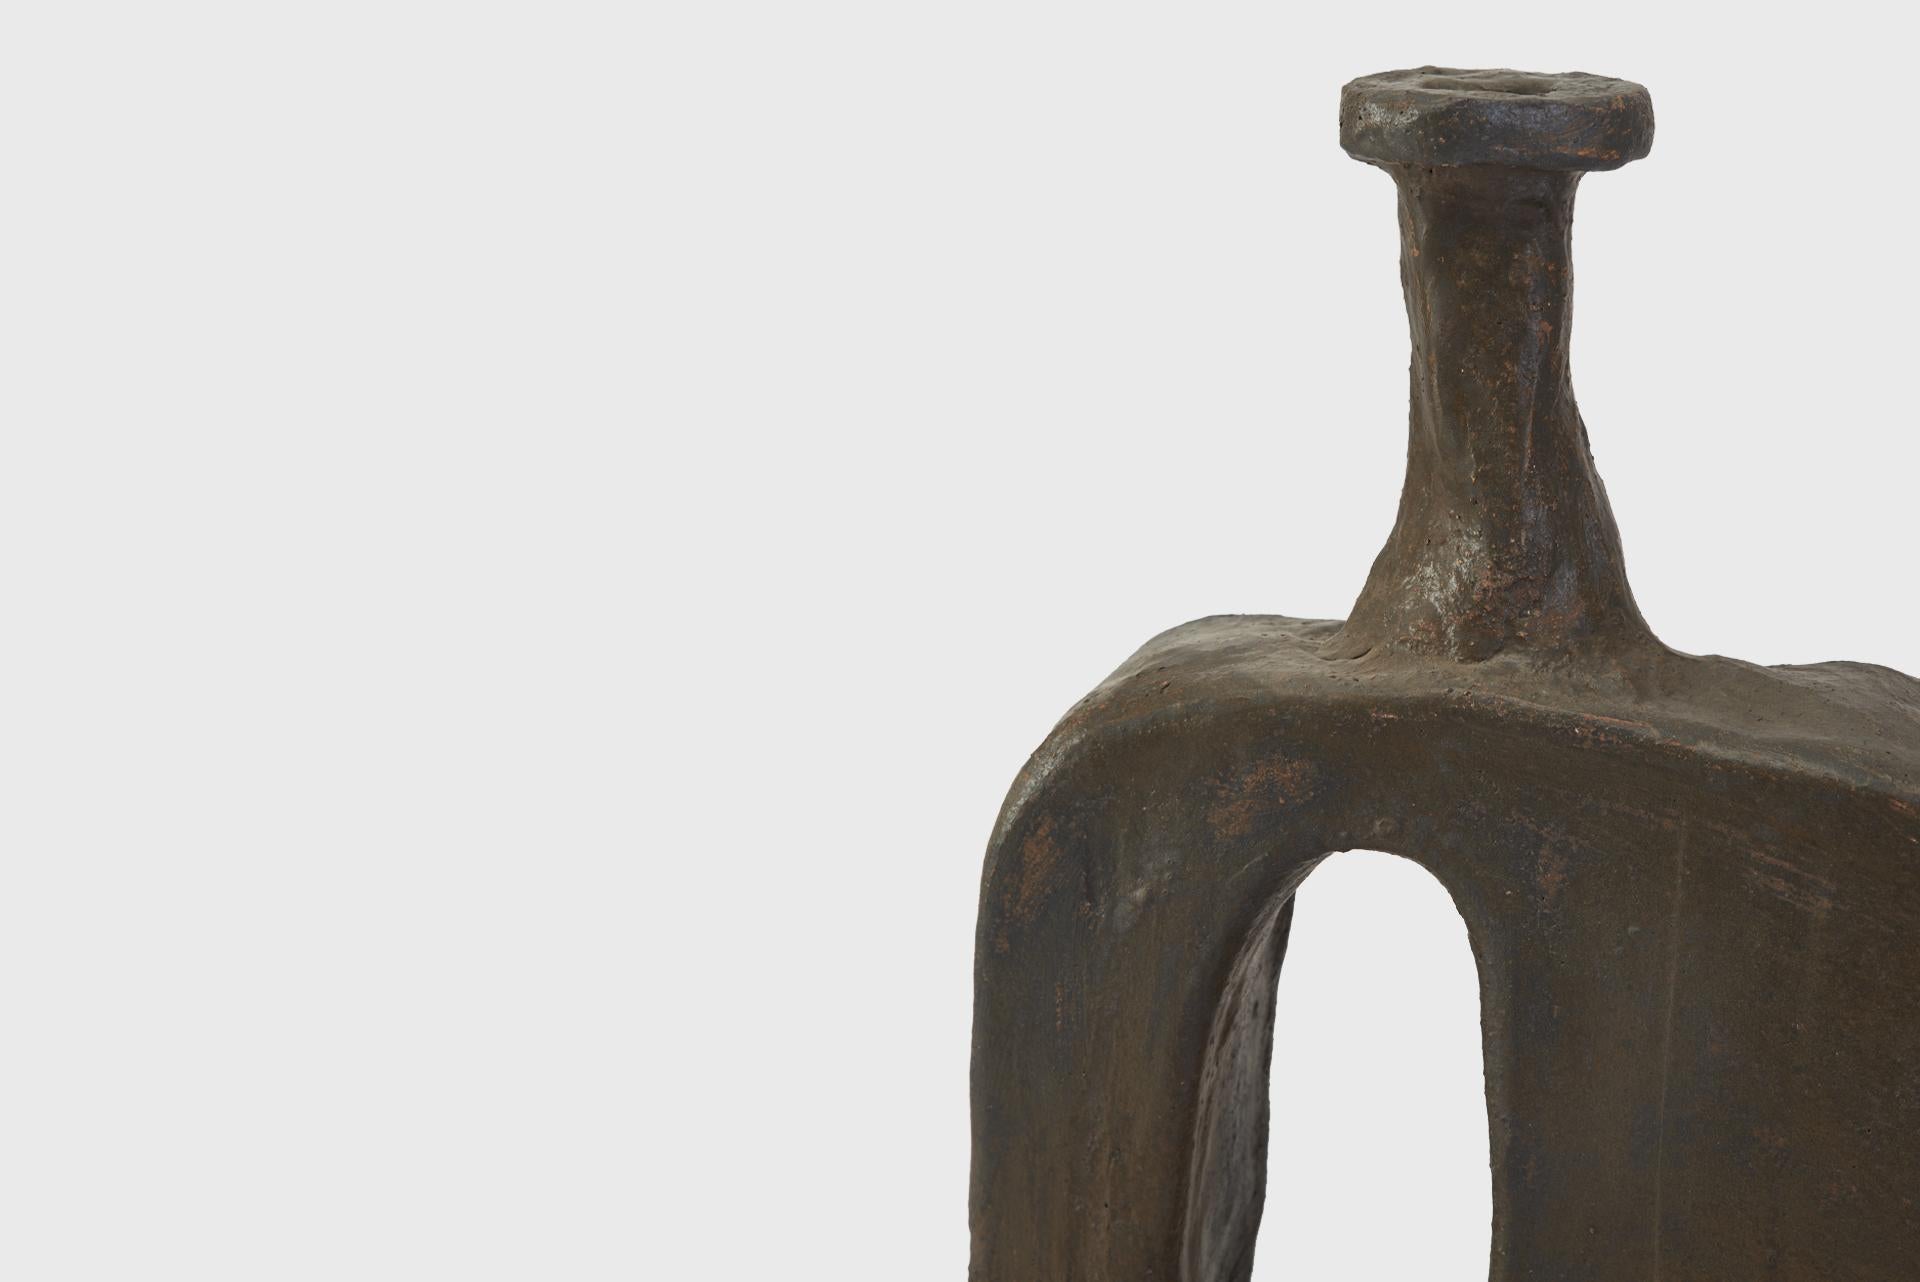 Vase model “Kupi”
Manufactured by Willem Van Hooff.
Exclusively for SIDE.
Netherlands, 2023.
Earthenware, glazed.

Measurements
35 x 9 x 54h cm
13,8 x 3,5 x 21,3h in

Provenance
Holland, Netherlands.

Exhibitions
Casavells